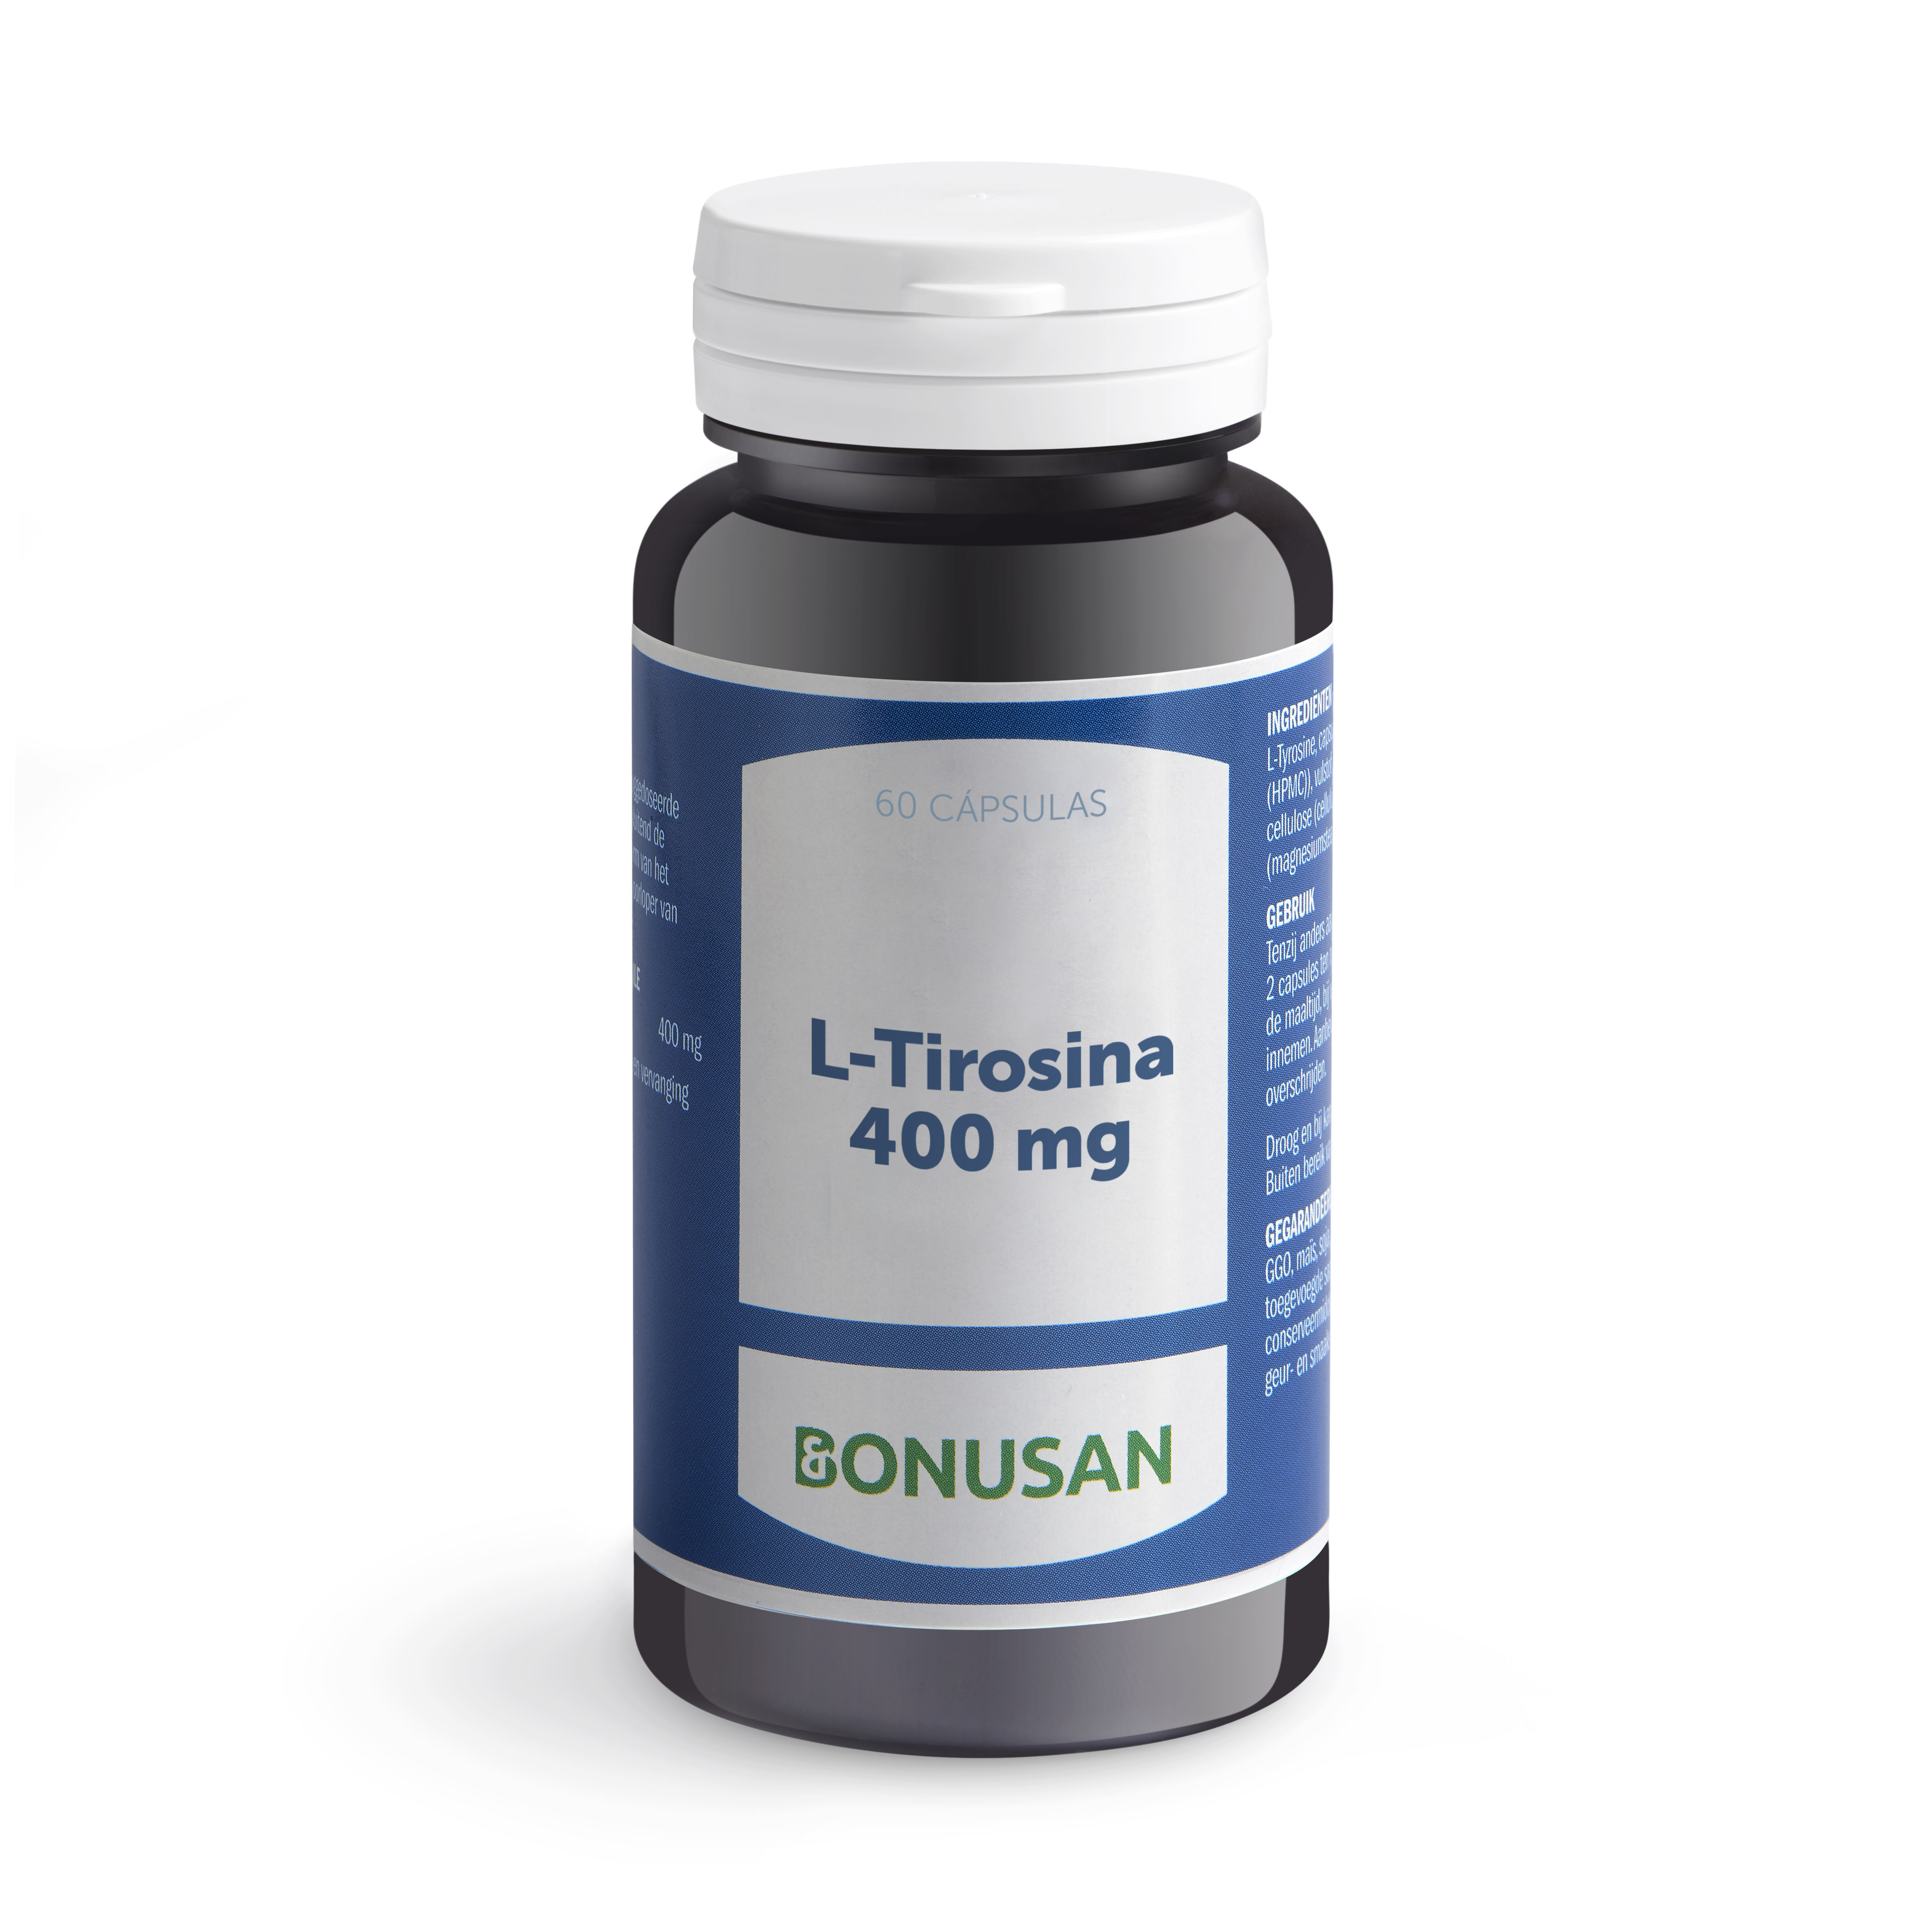 L-Tirosina 400 mg